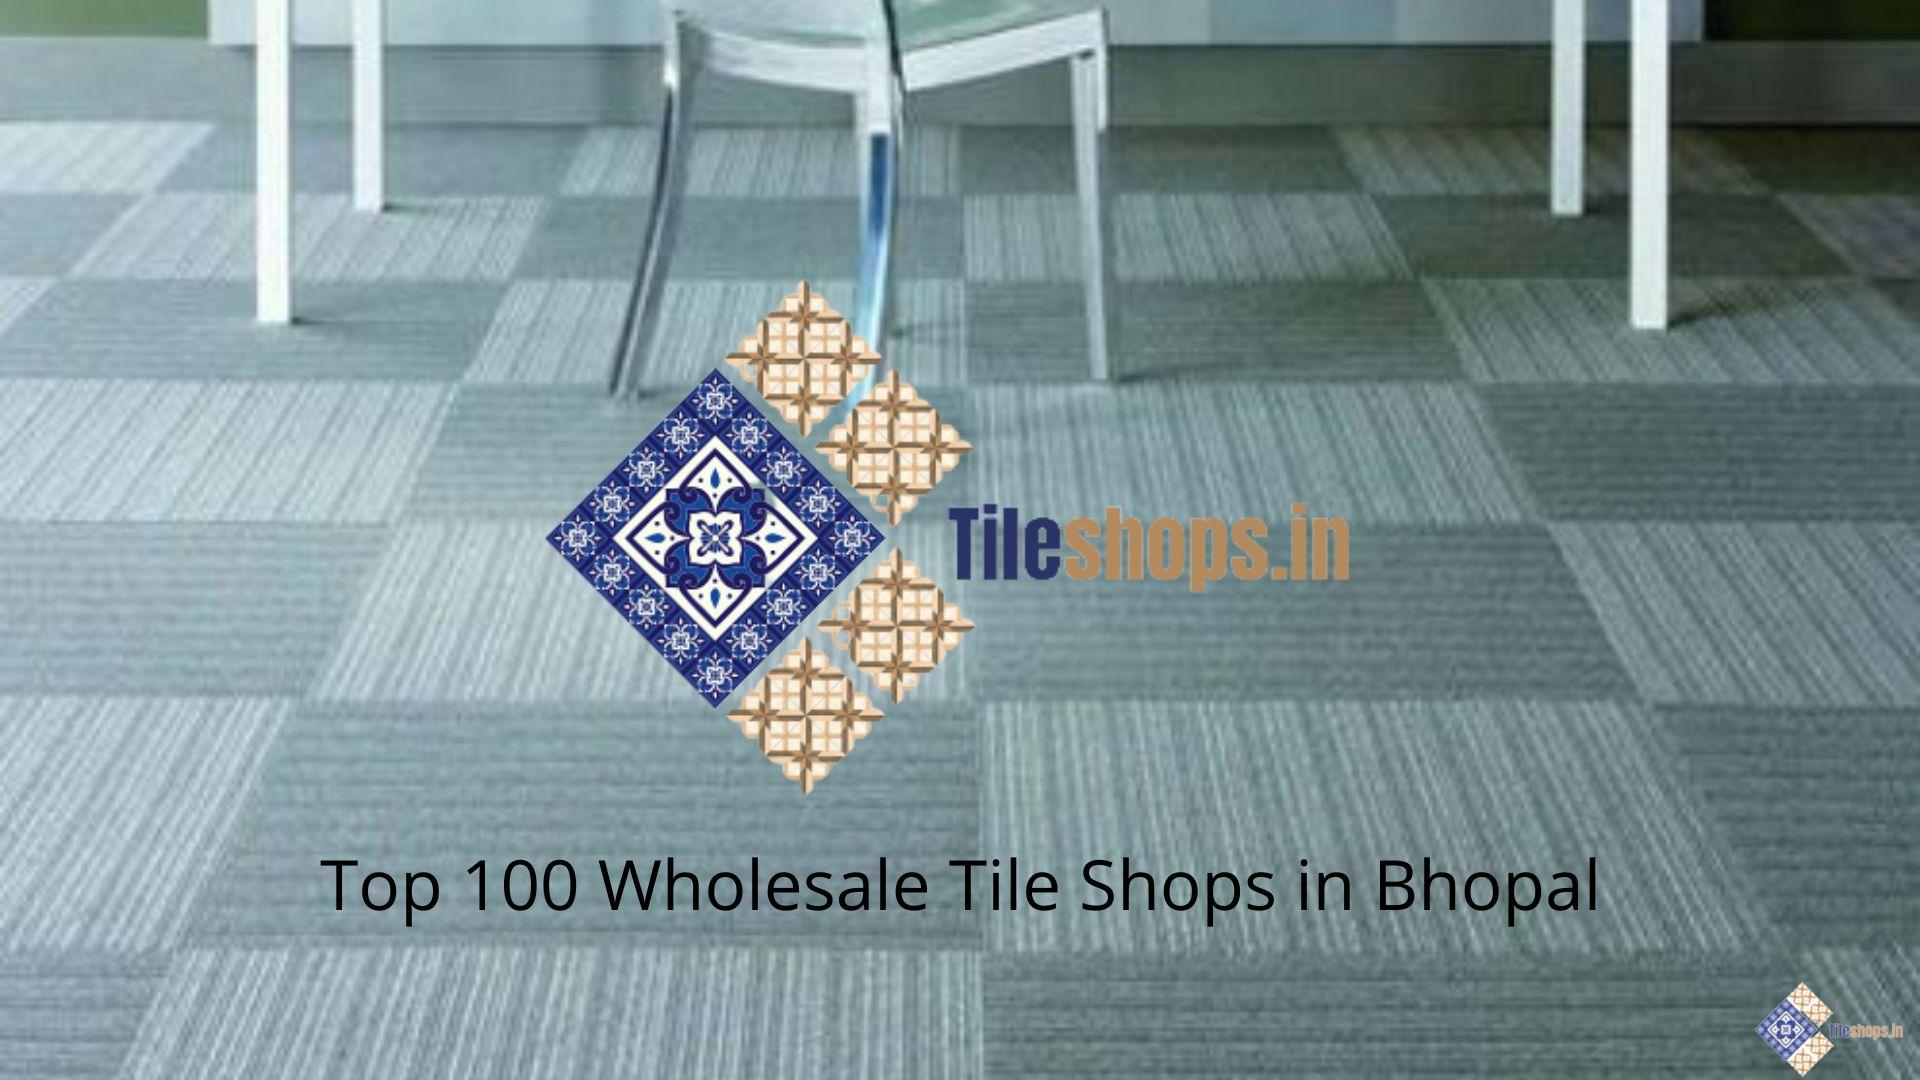 Top 100 Wholesale Tile Shops in Bhopal